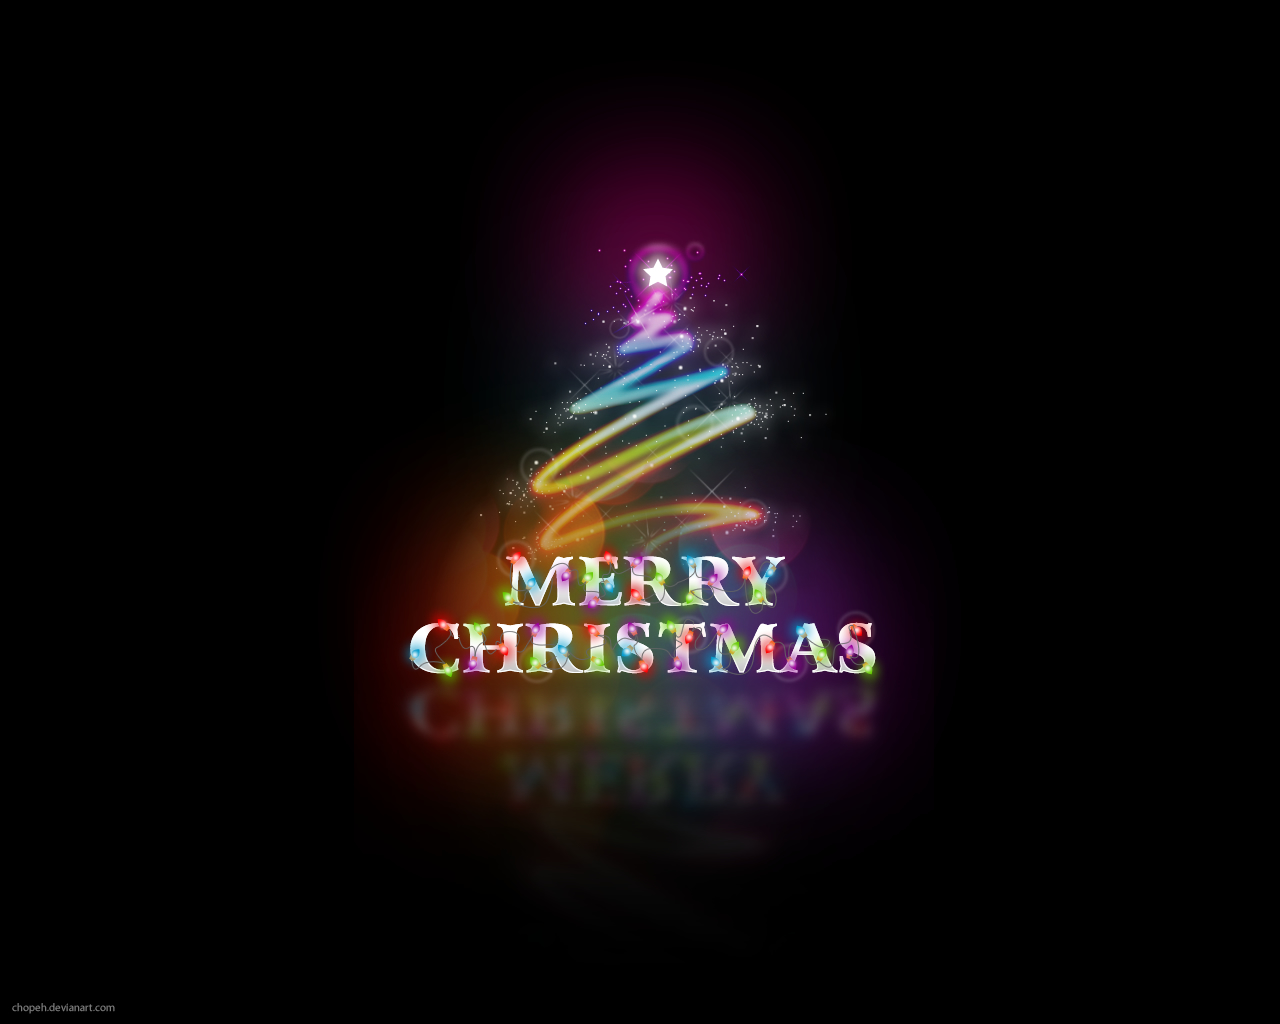 http://3.bp.blogspot.com/-2eX-fWQ0w10/TvRy5rvxszI/AAAAAAAAByg/RDXtybXaroo/s1600/Merry_Christmas__by_chopeh.jpg